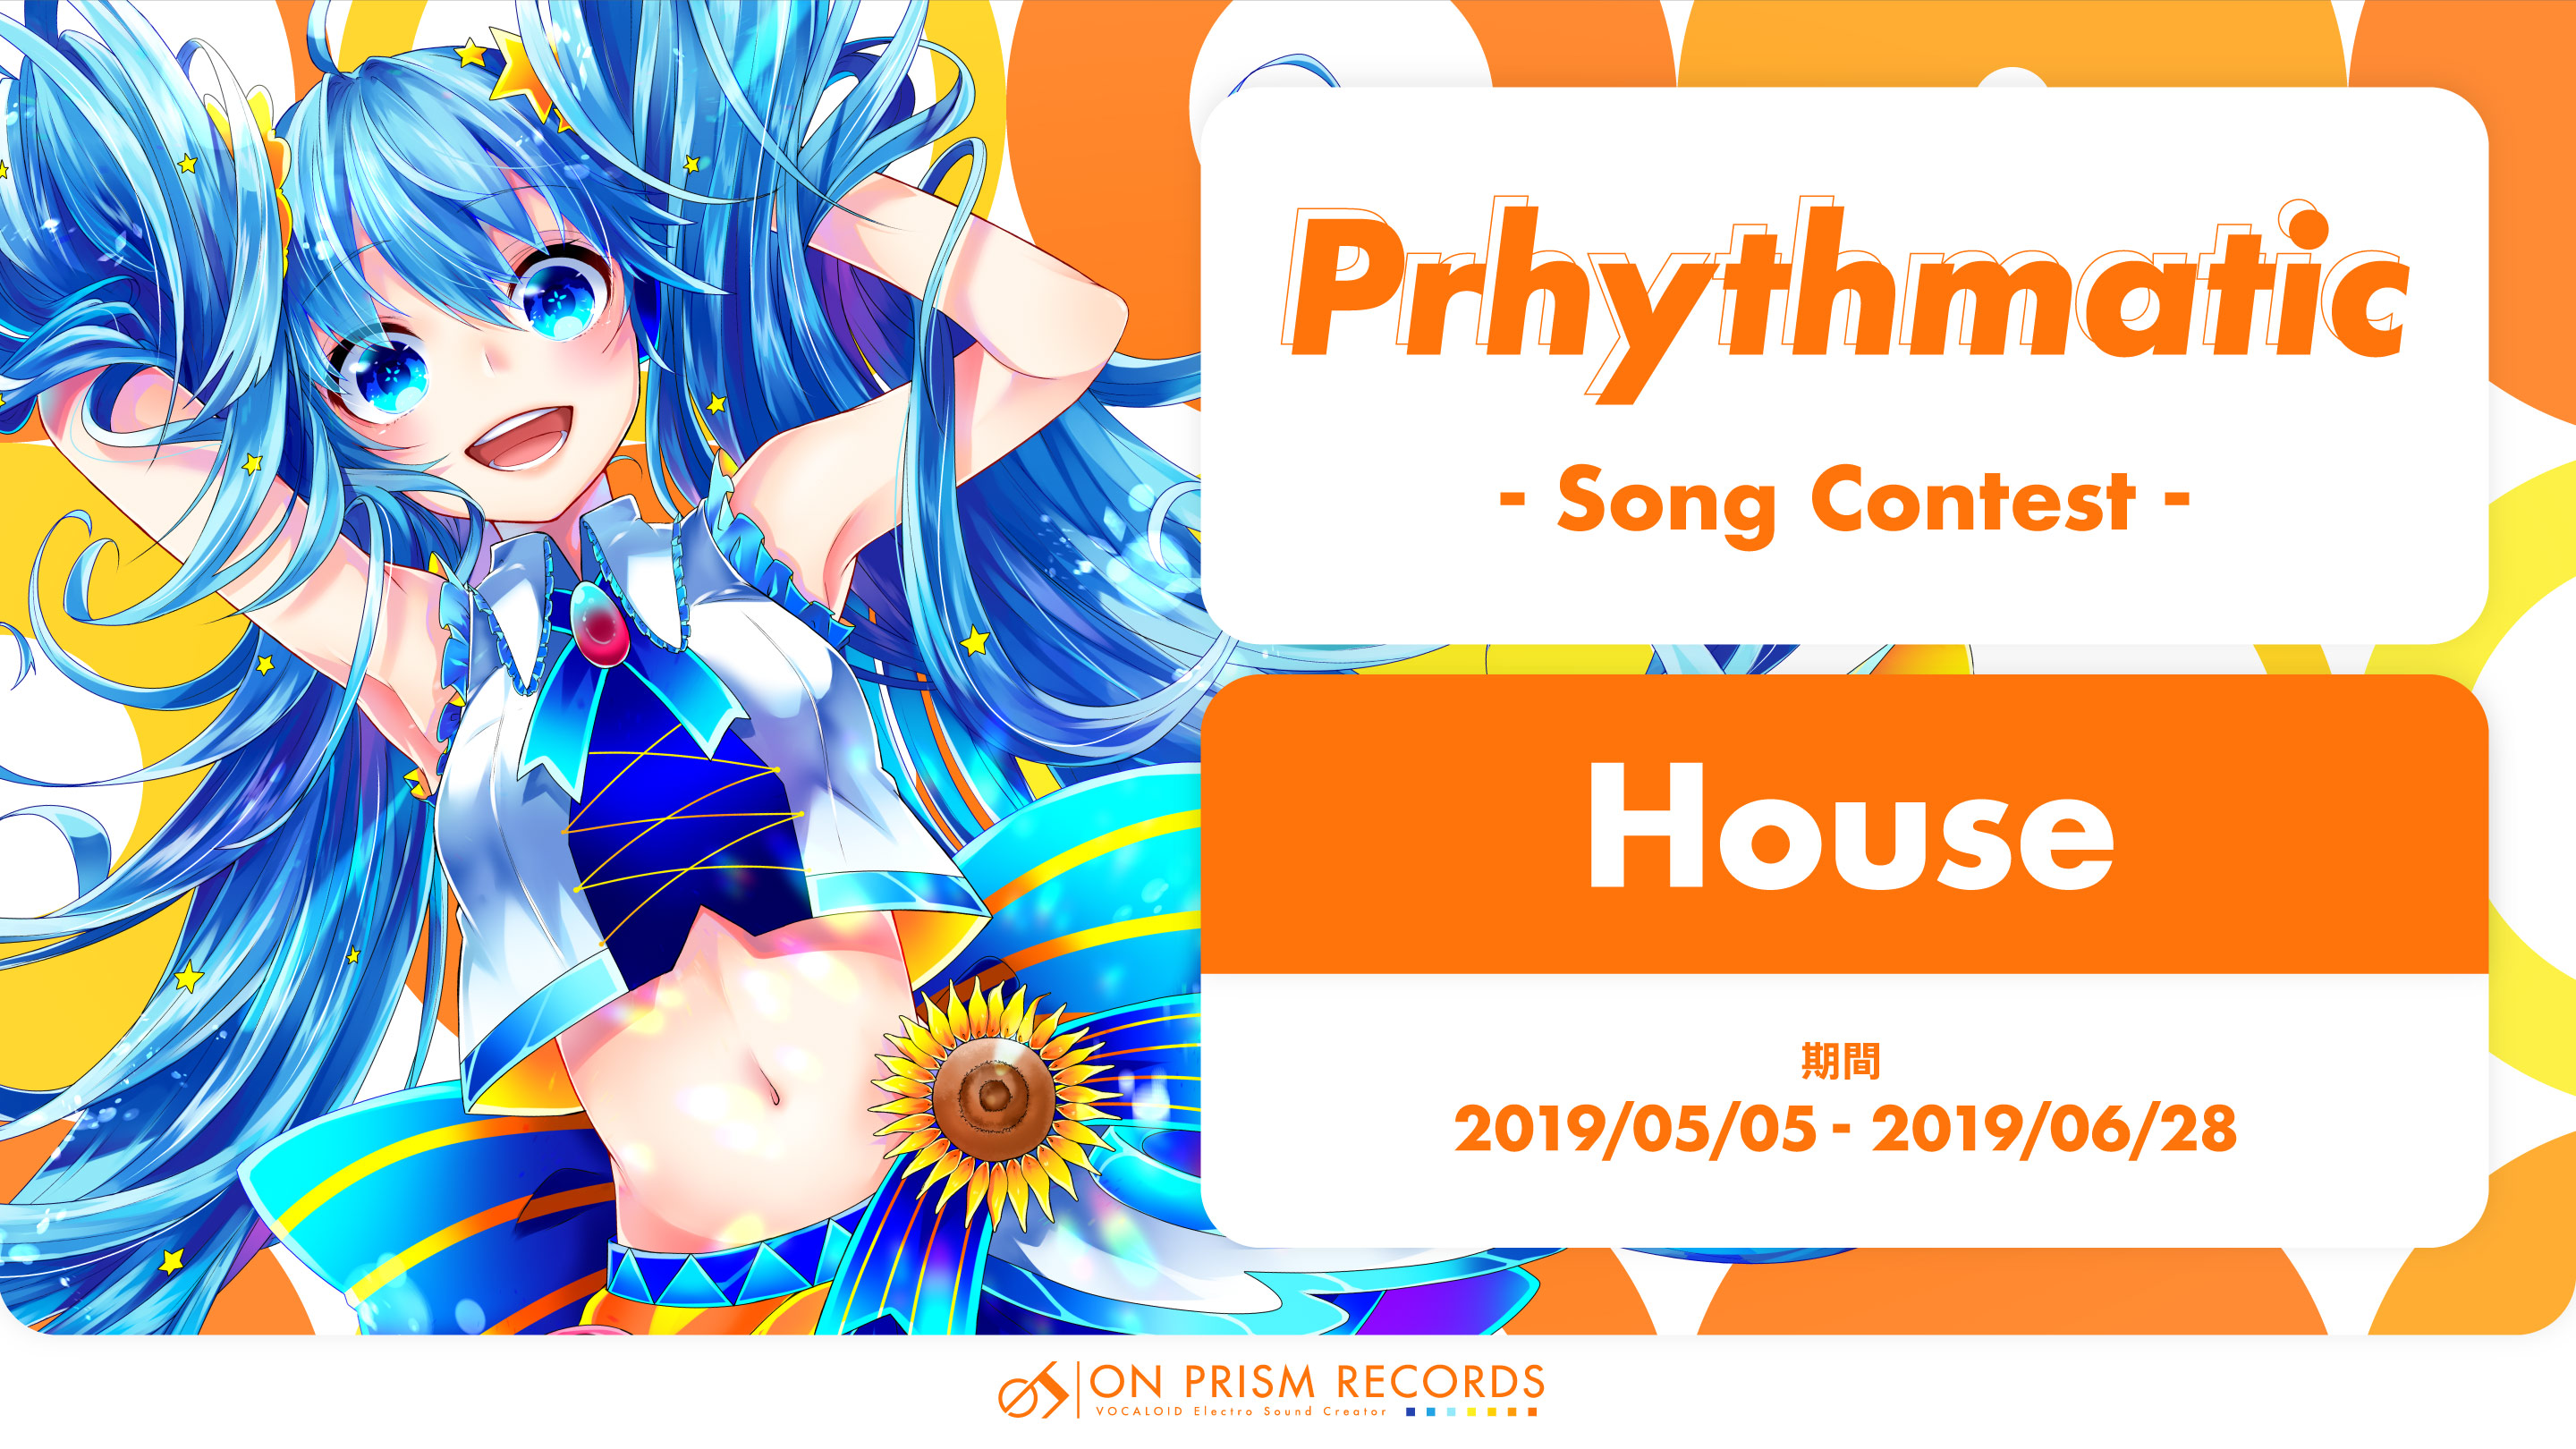 Prhythmatic House 2 Song Contest